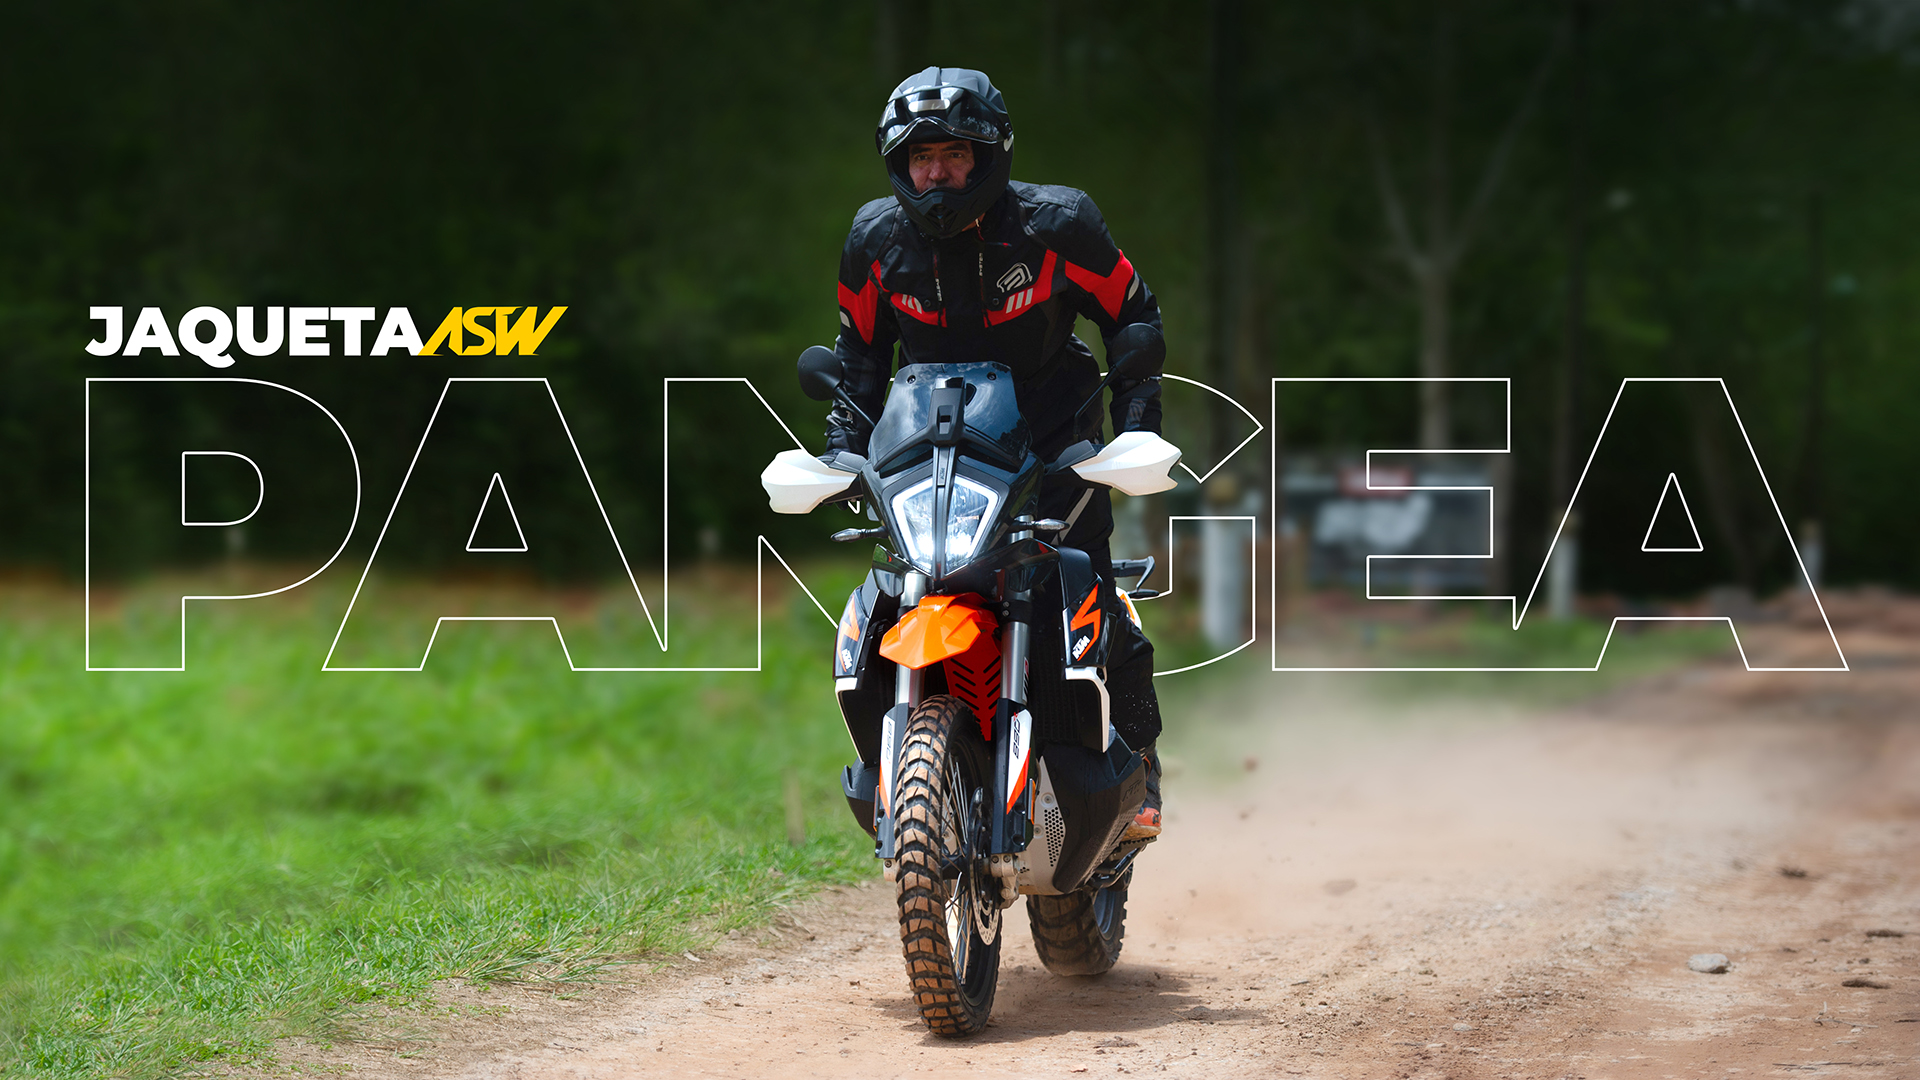 Jaqueta motocross, enduro, rally, off road, on road